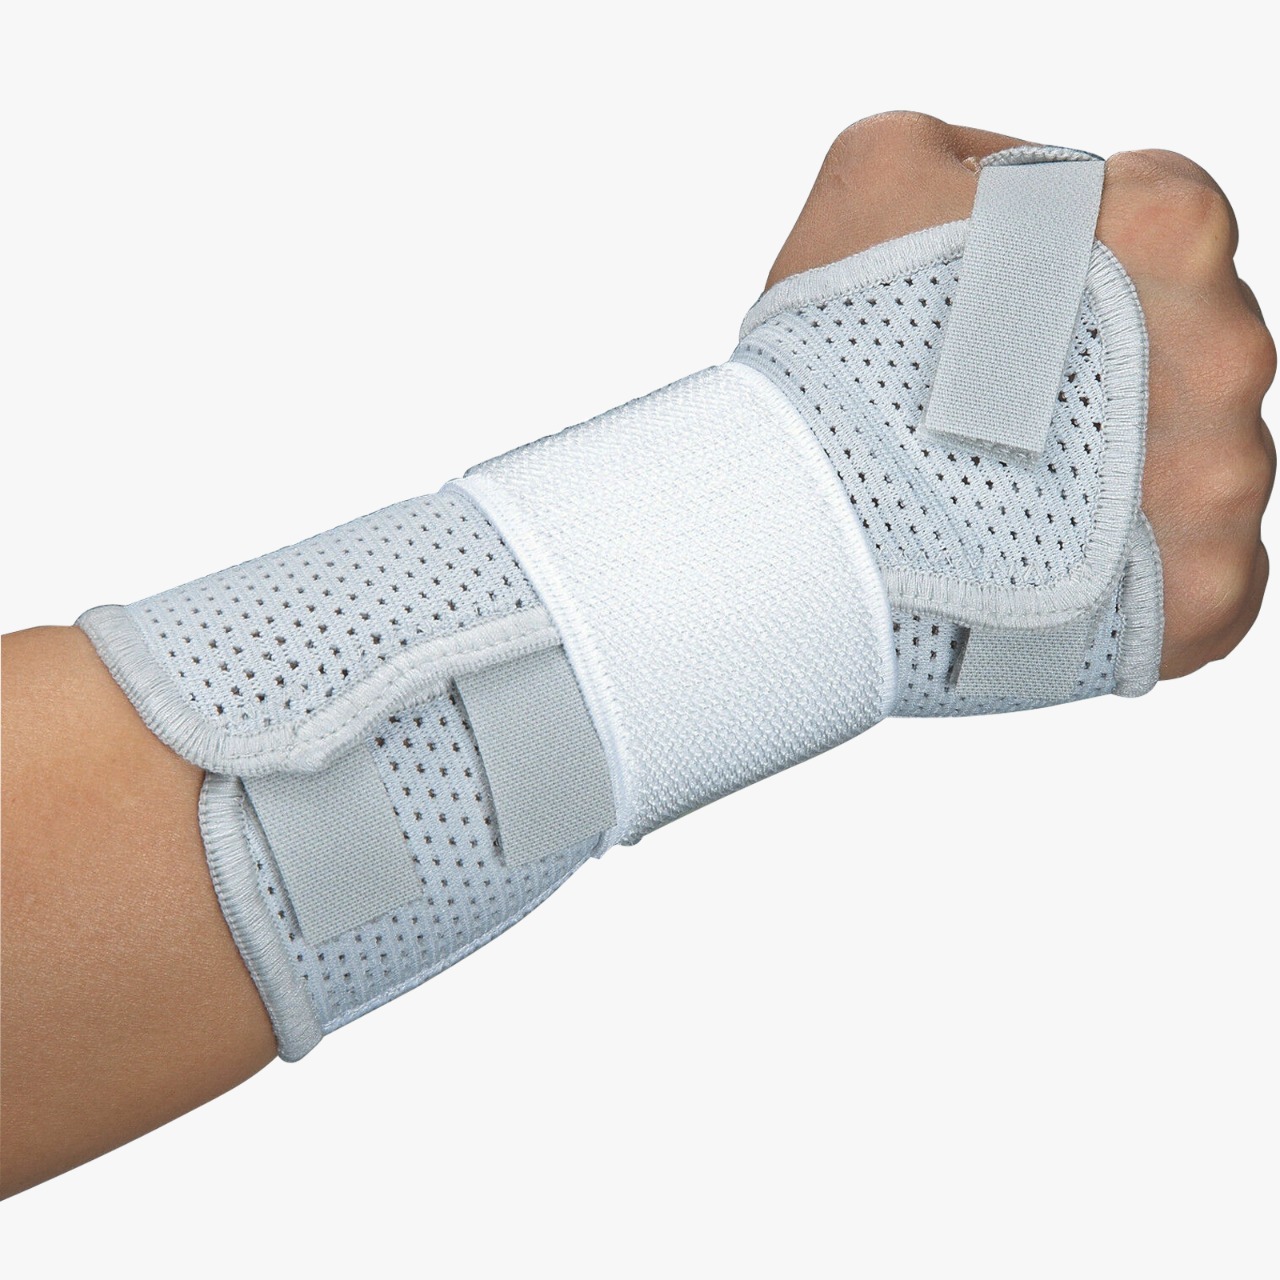 Extra Large Left Hand Breathable Wrist Support Brace Splint For Carpal Tunnel, Arthritis Sprain Strain